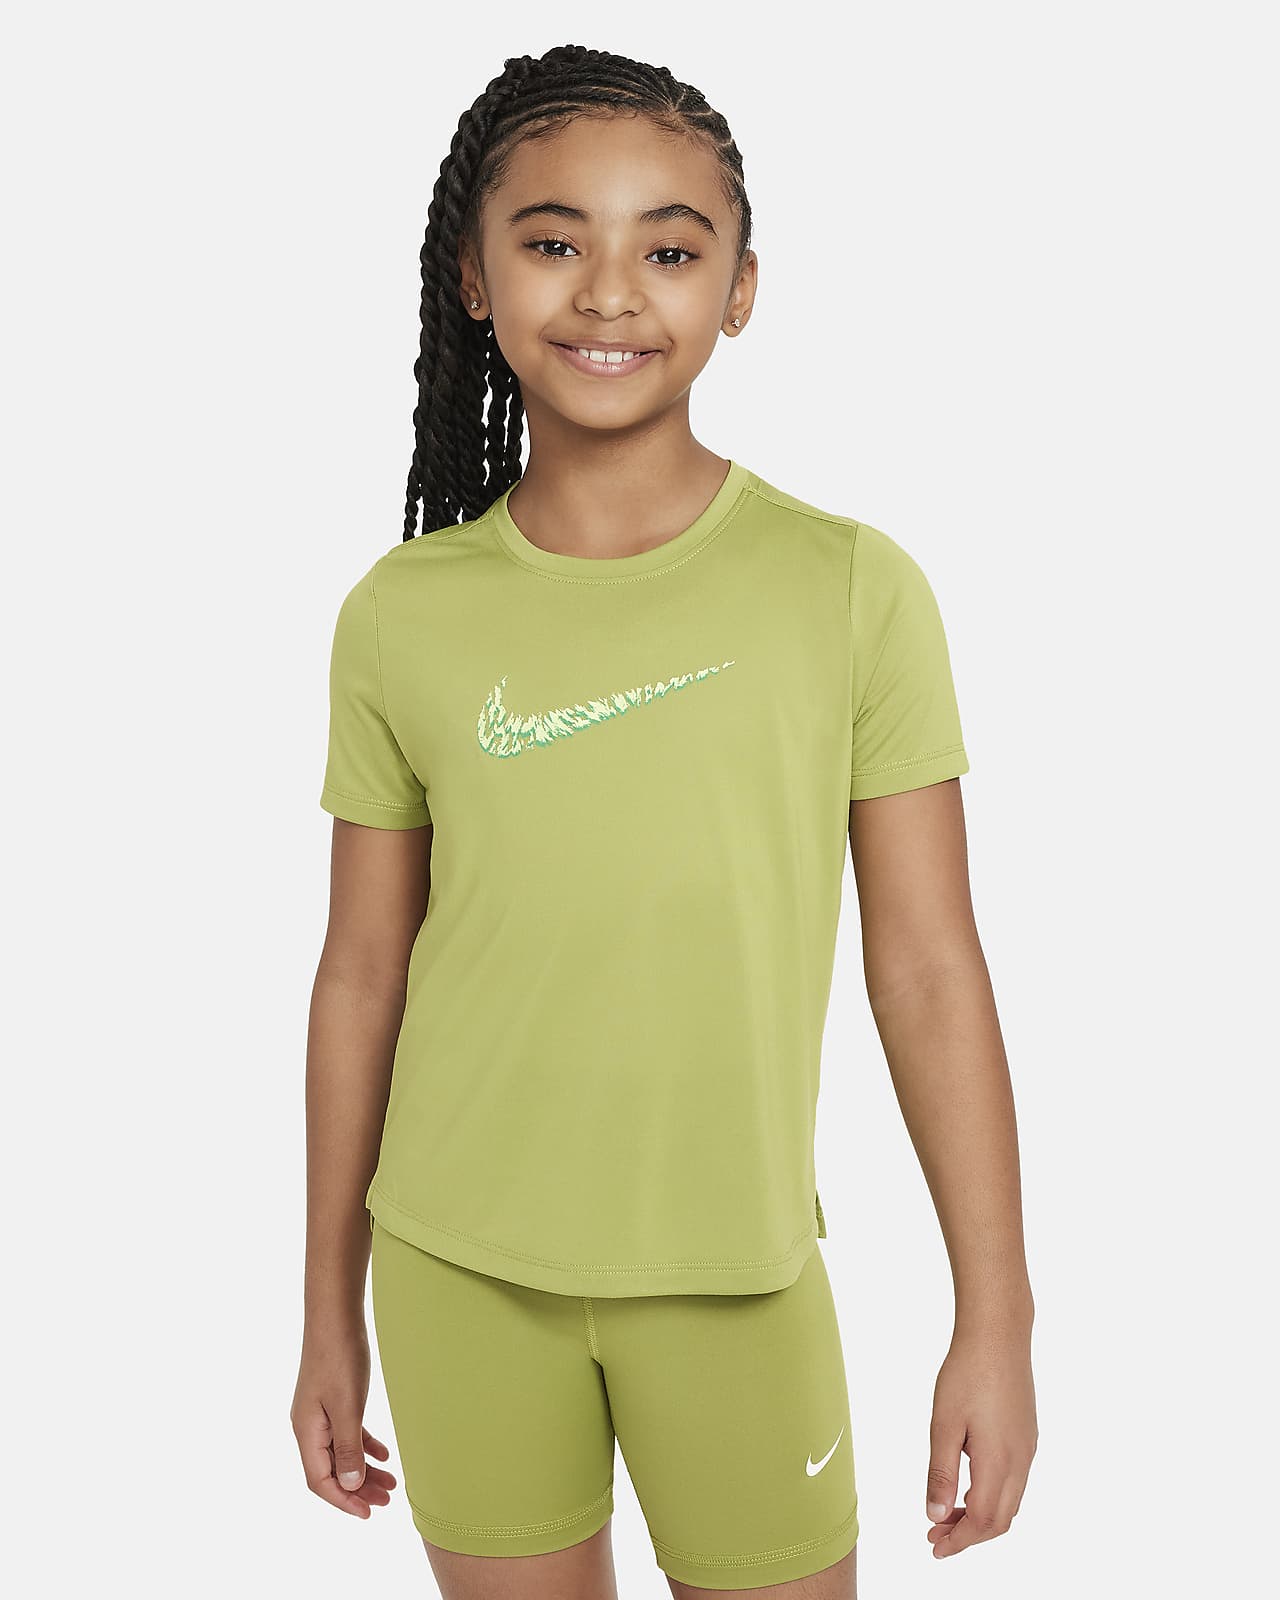 Big Training Top. One Kids\' Short-Sleeve Nike (Girls\')